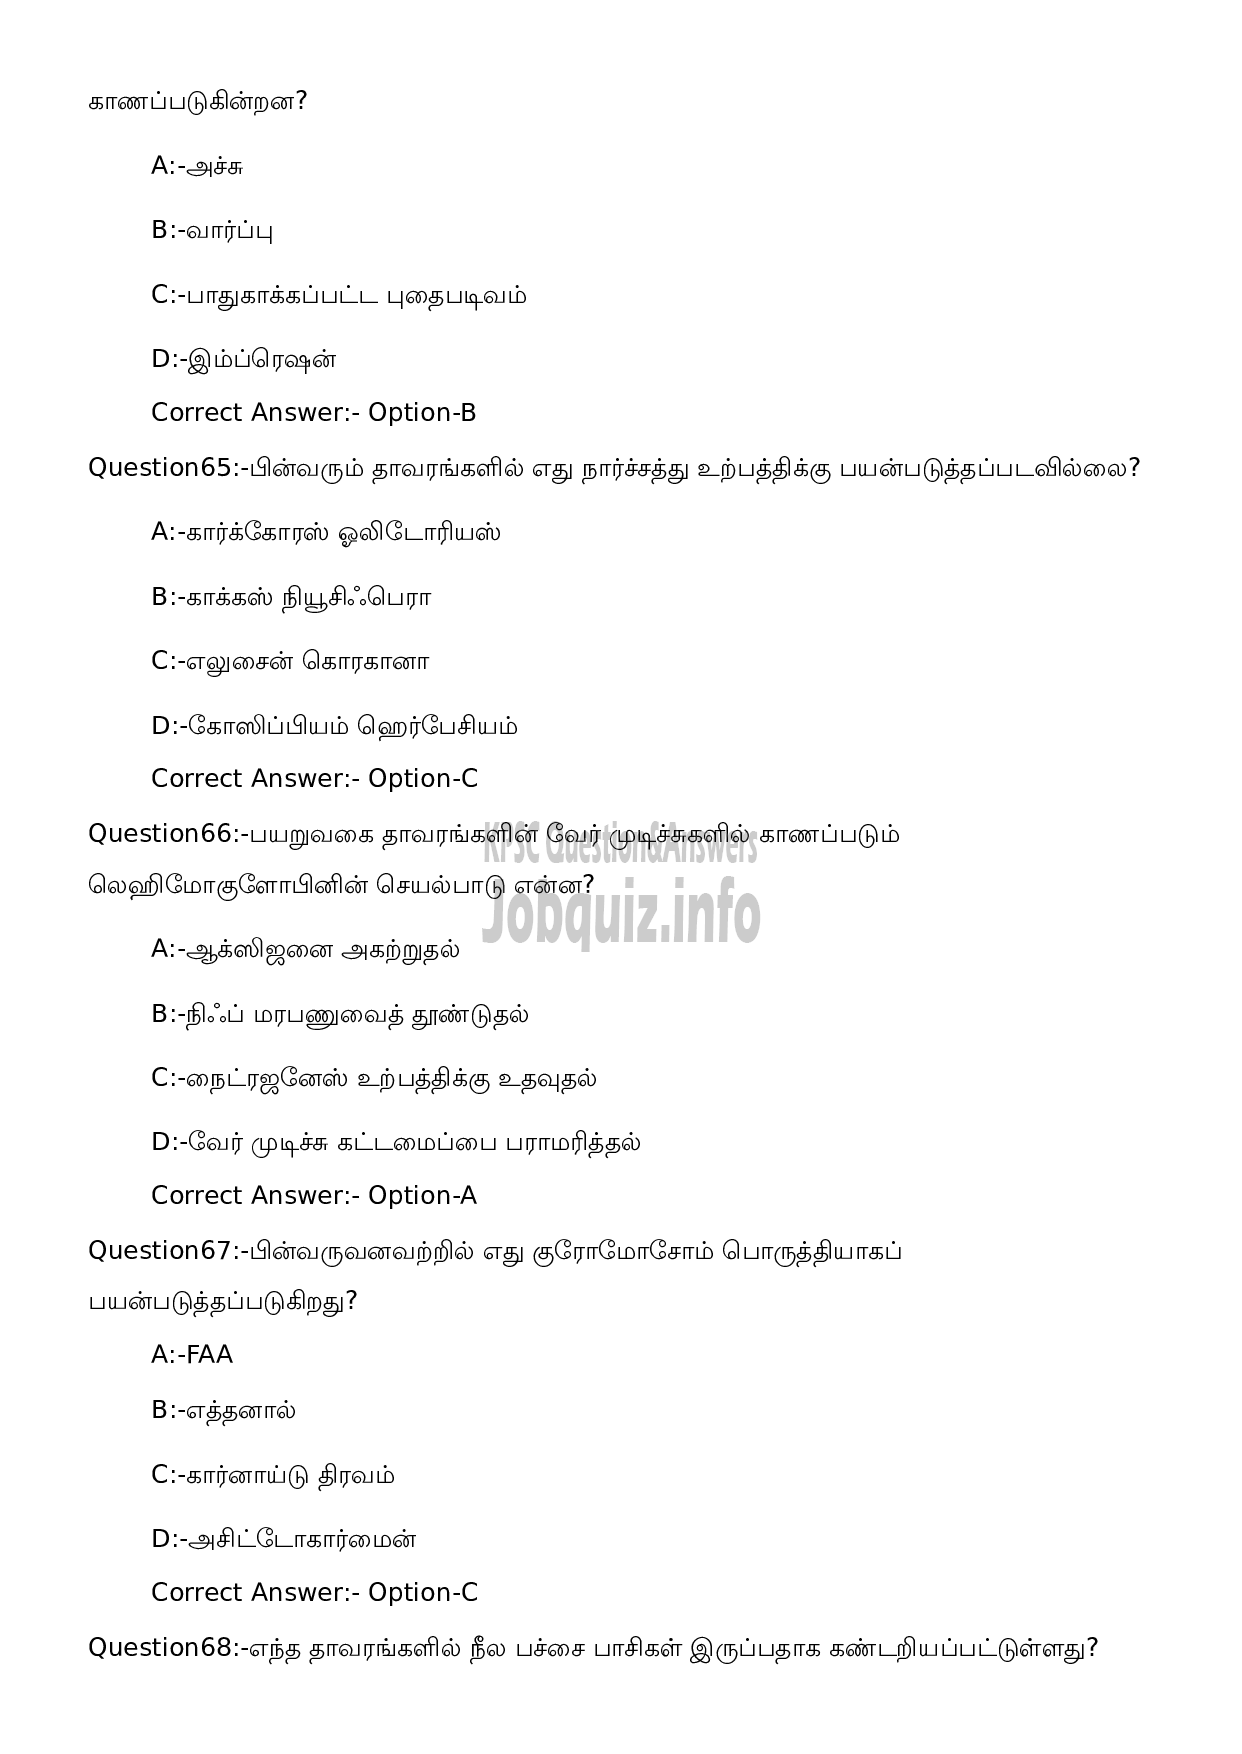 Kerala PSC Question Paper - High School Teacher Natural Science (Tamil Medium)-16